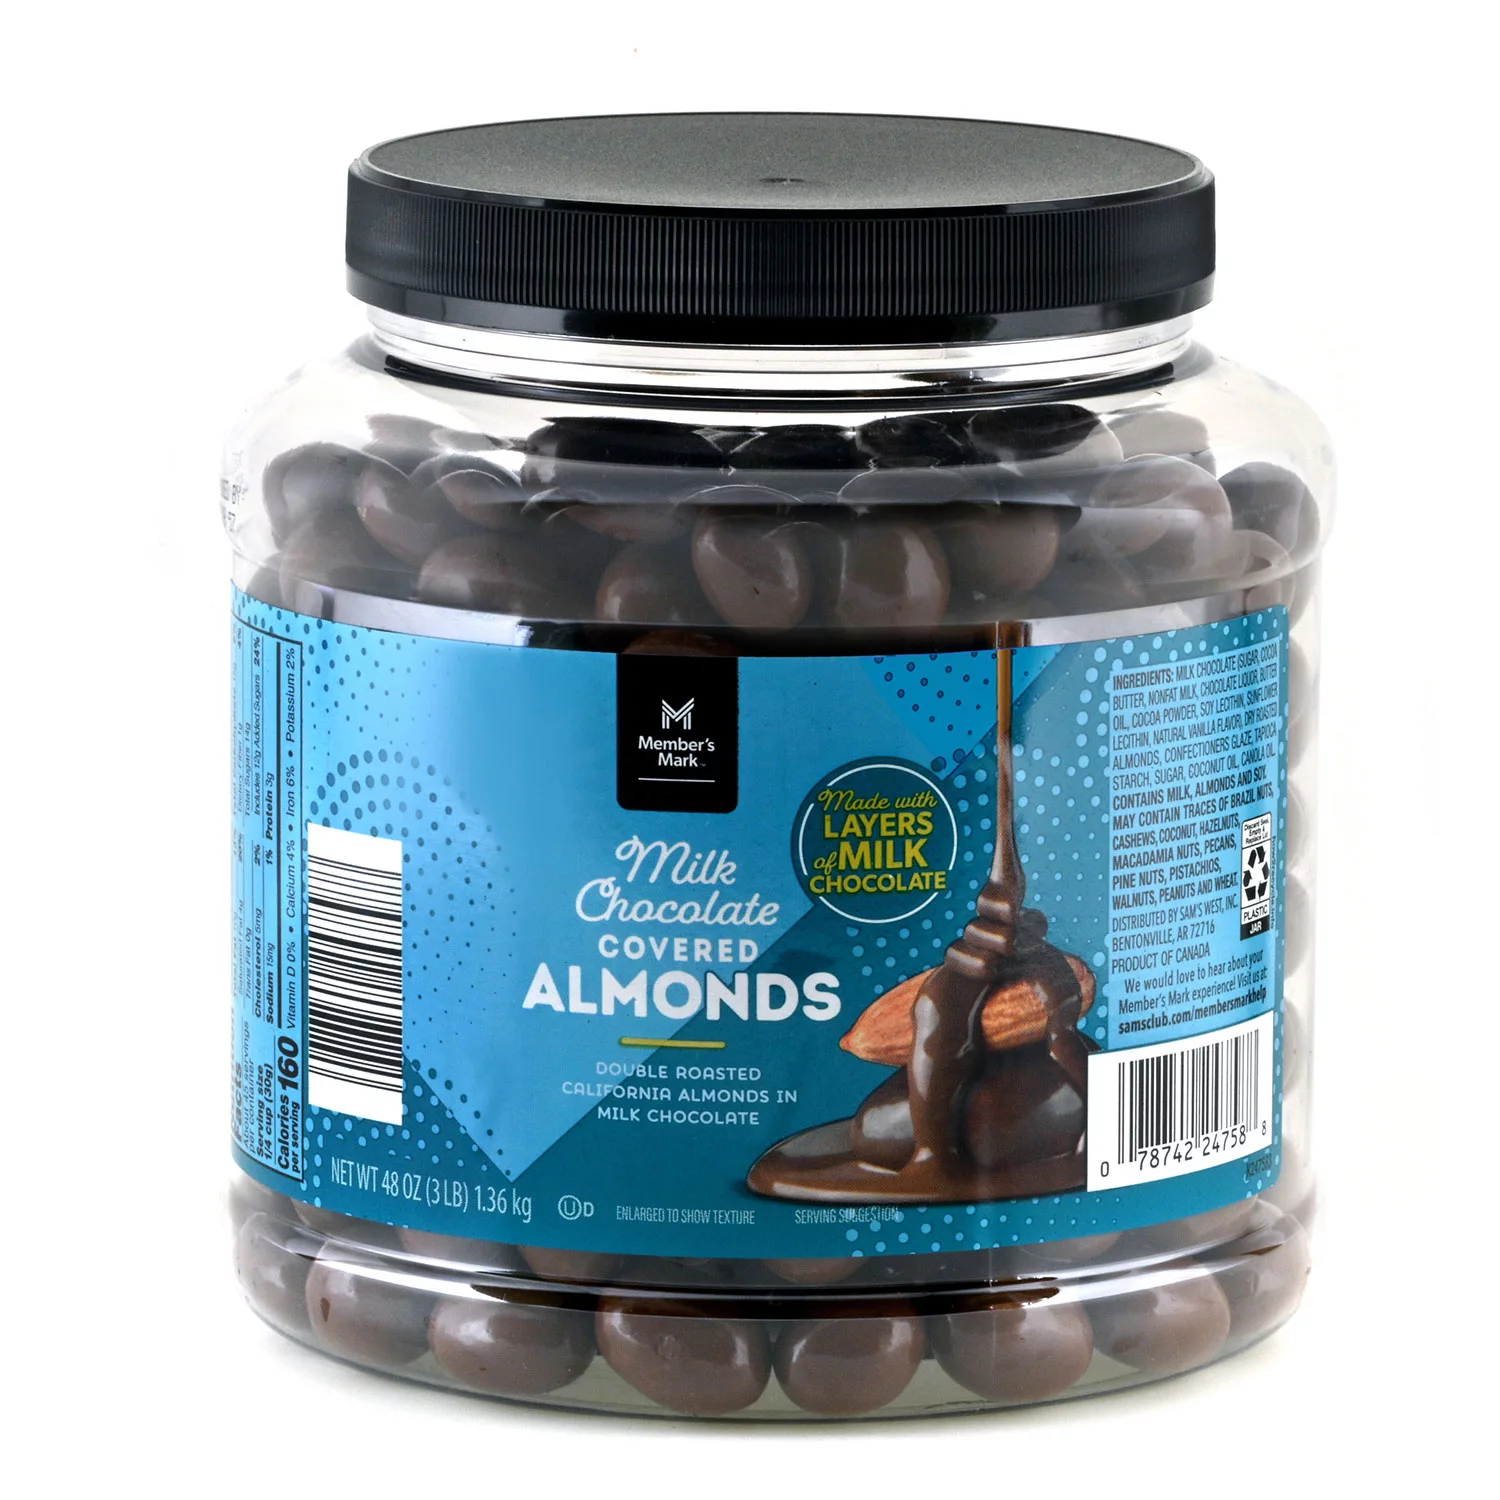 Member's Mark Chocolate Almonds